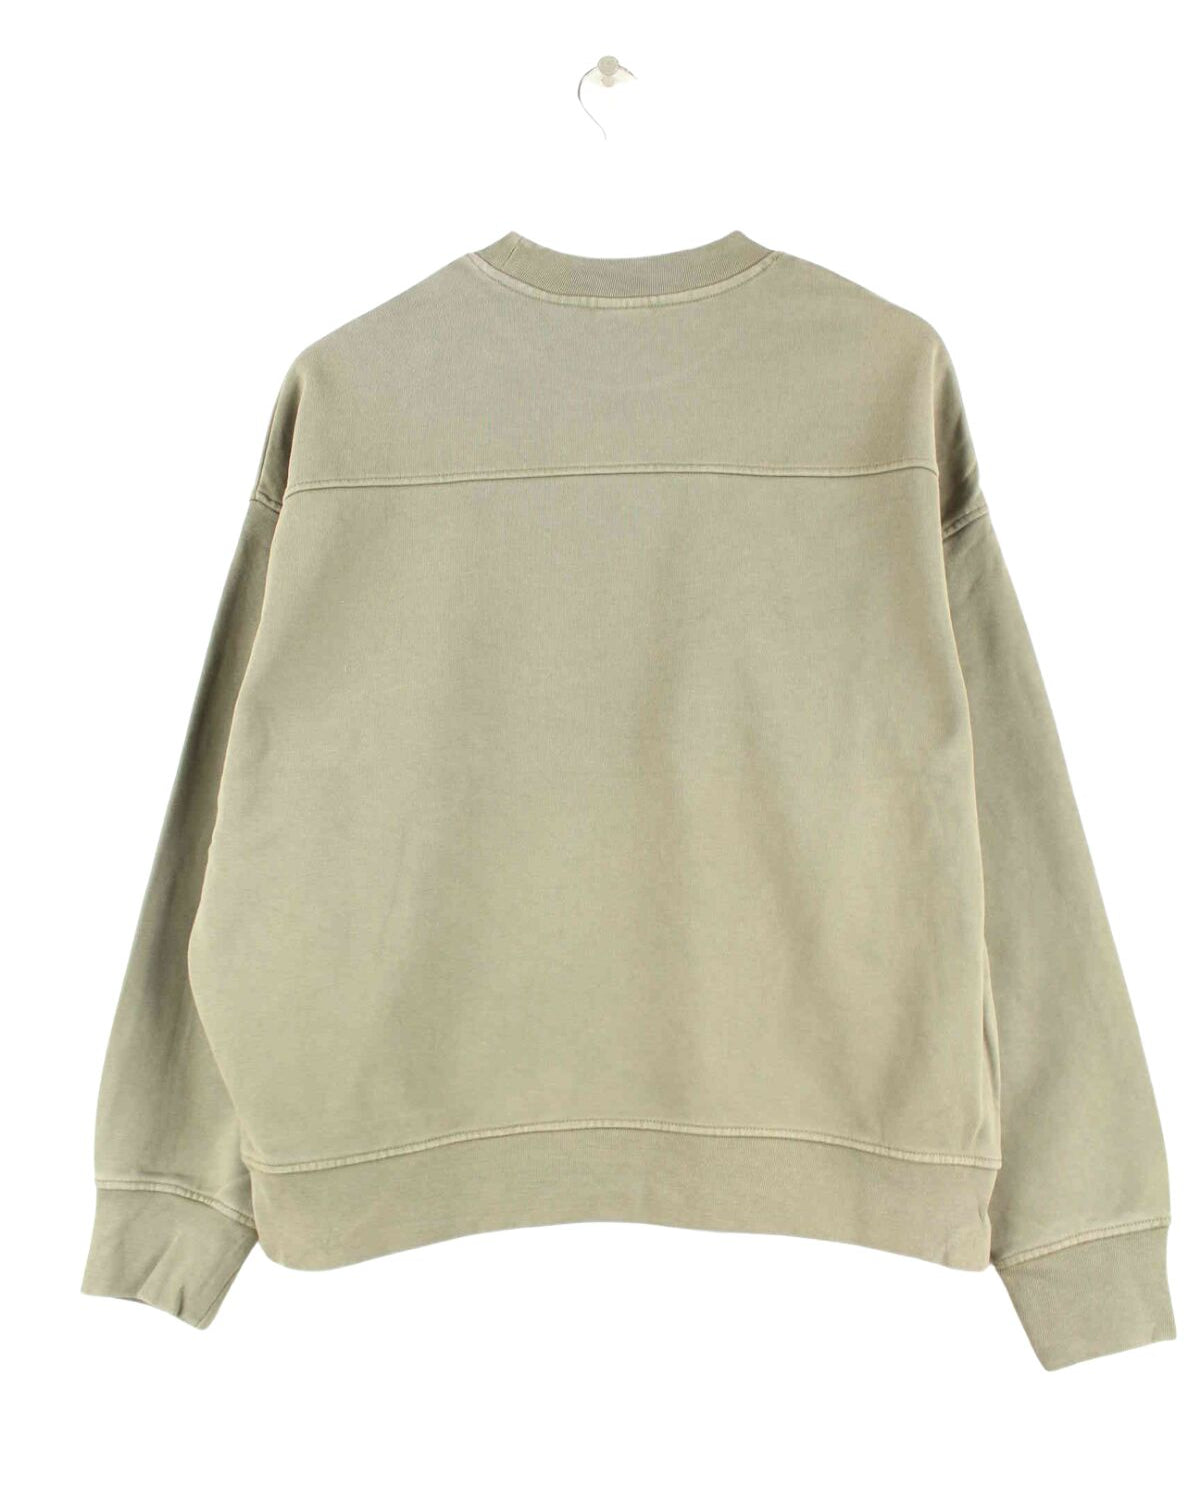 Levi's Basic Sweater Braun S (back image)